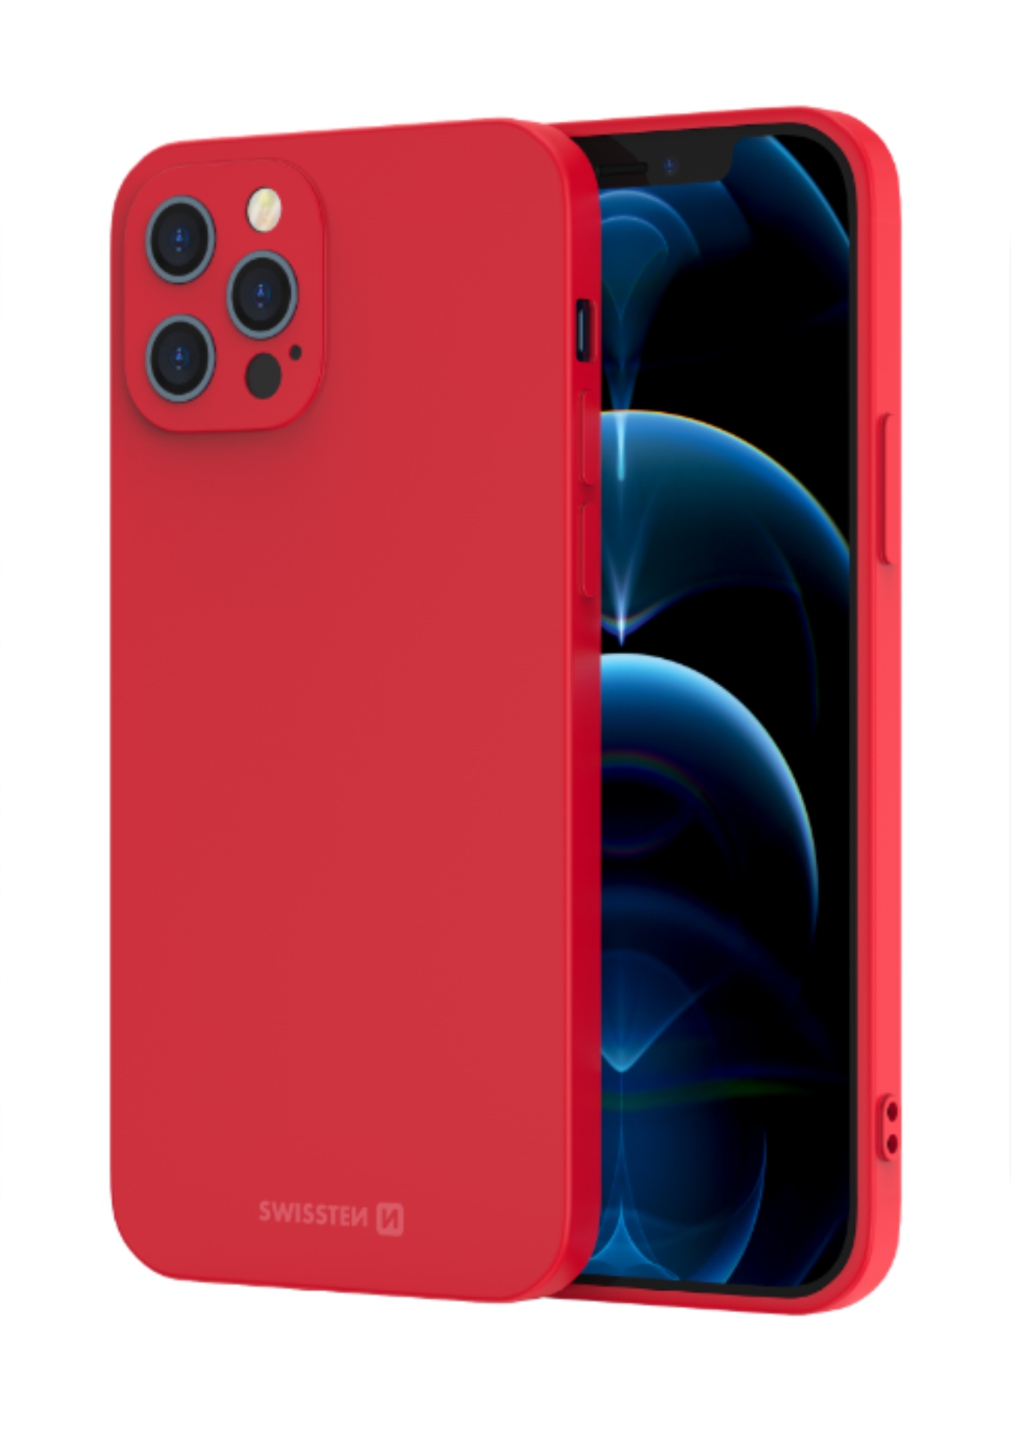 Swissten iPhone 11 Pro Max Soft Joy Case - 34500176 - Red